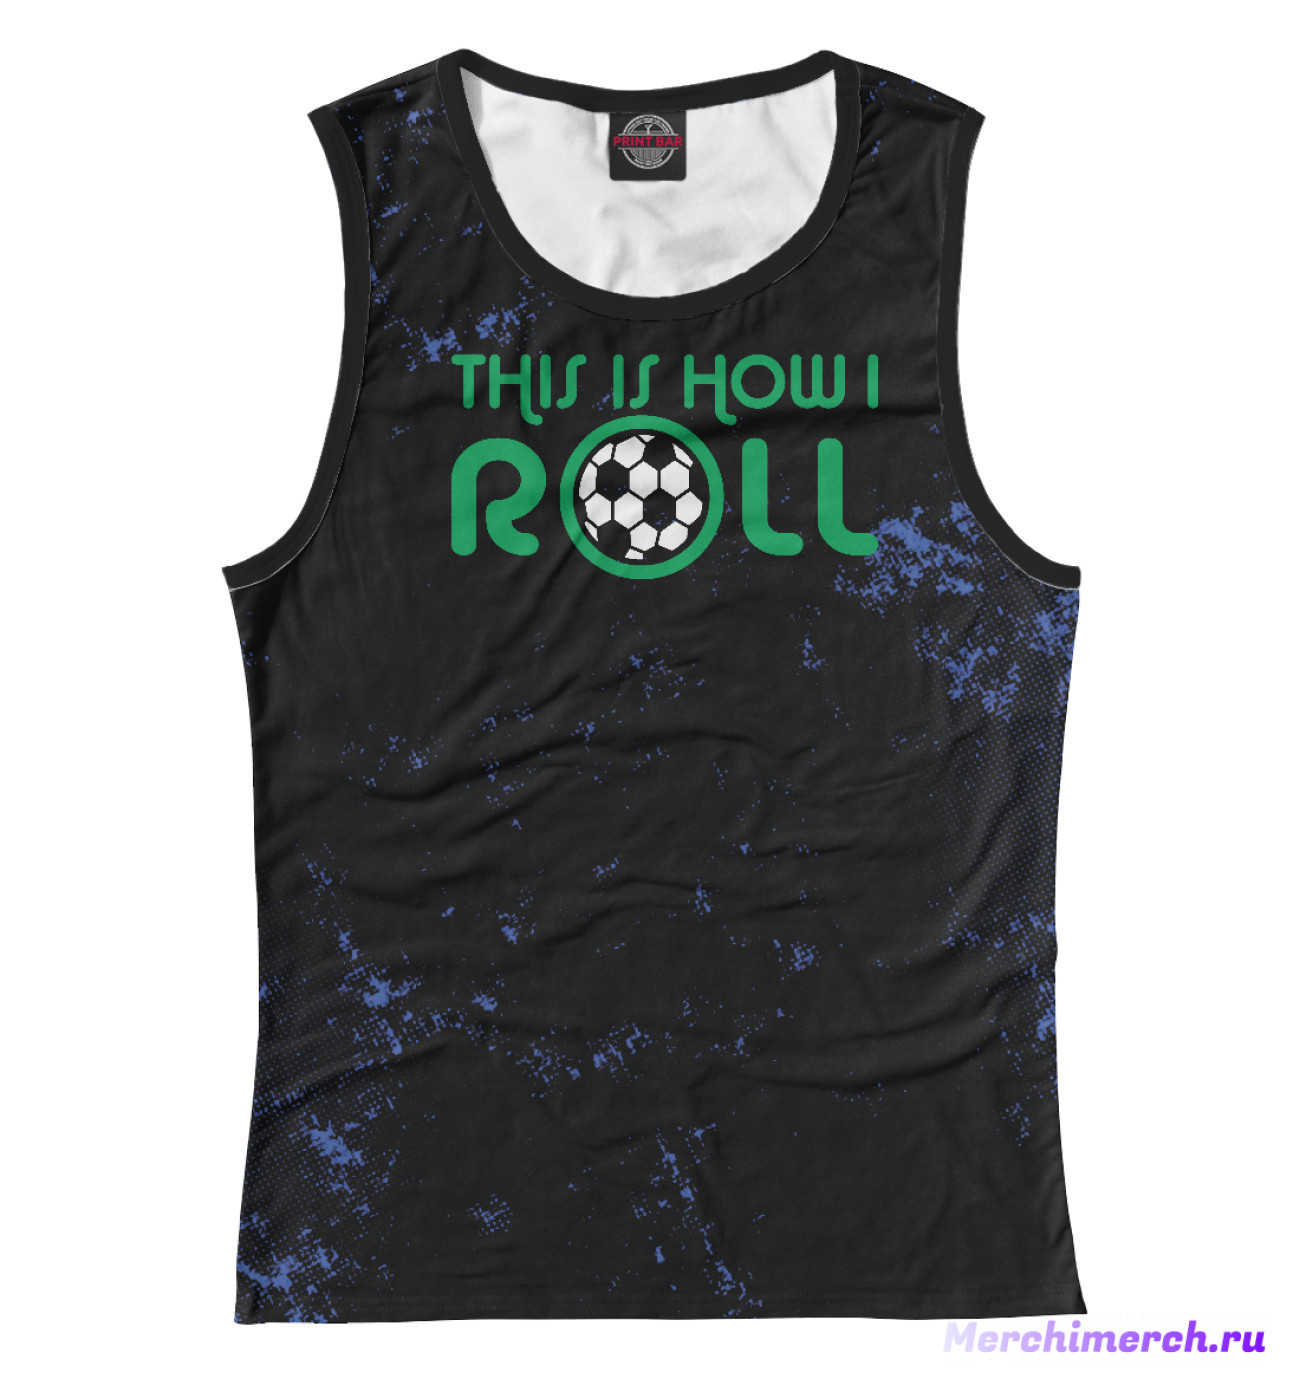 Женская Майка This Is How I Roll Soccer, артикул: FTO-140586-may-1